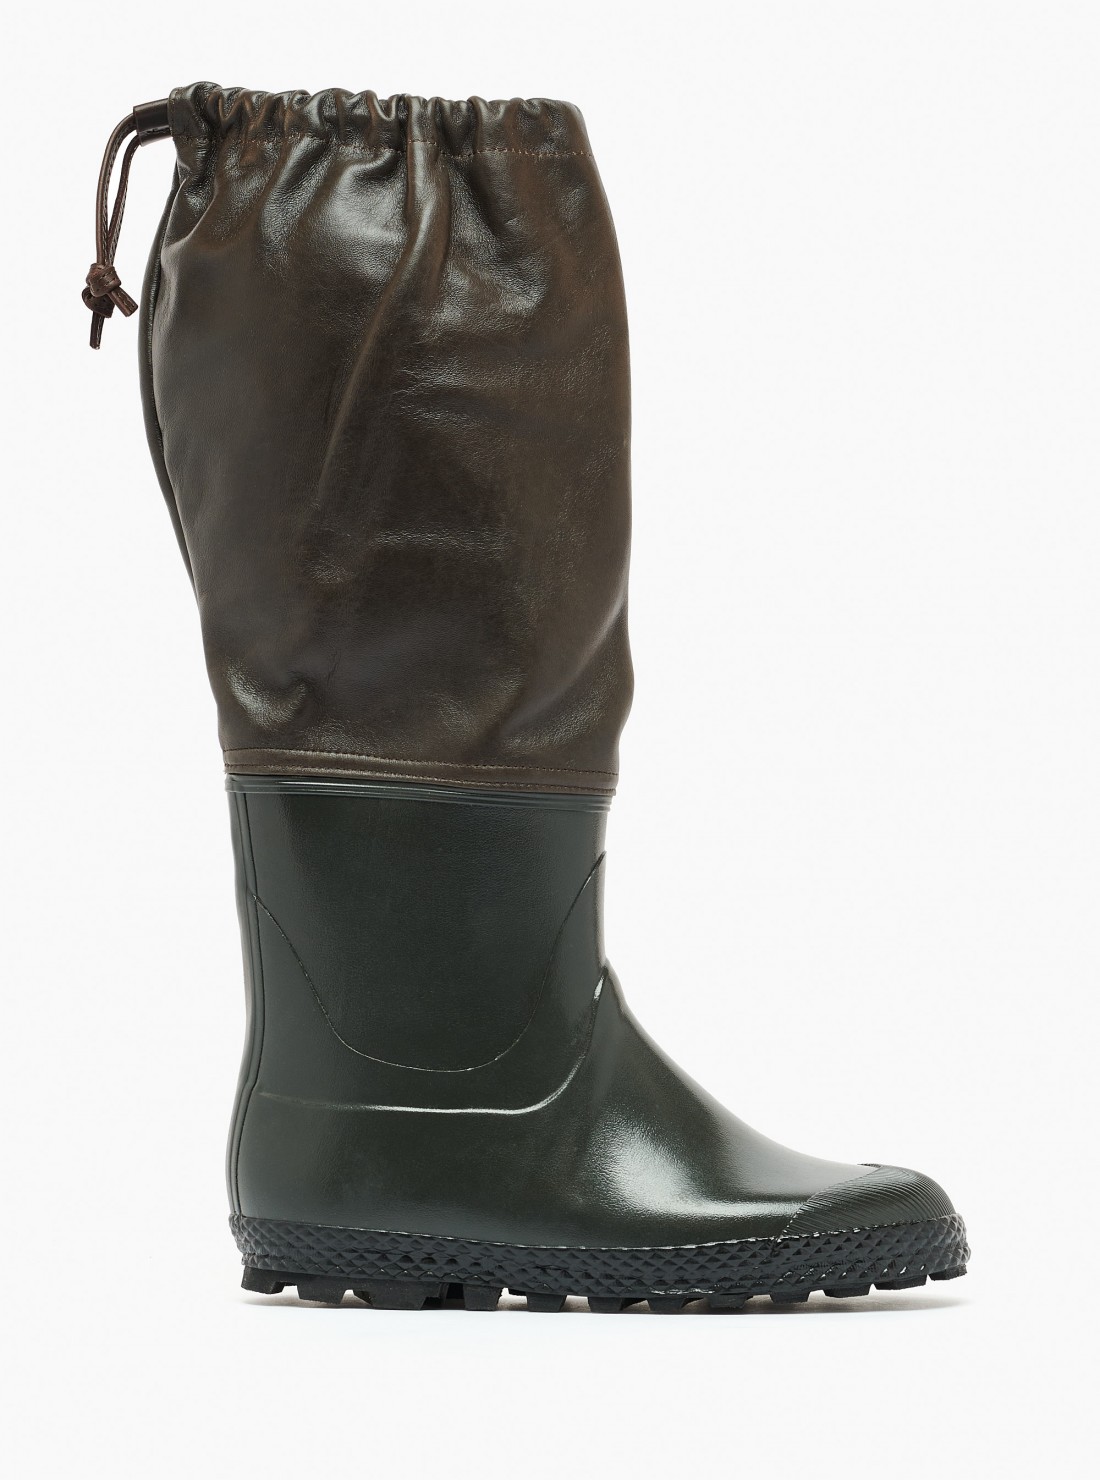 Farmers Rain Boots